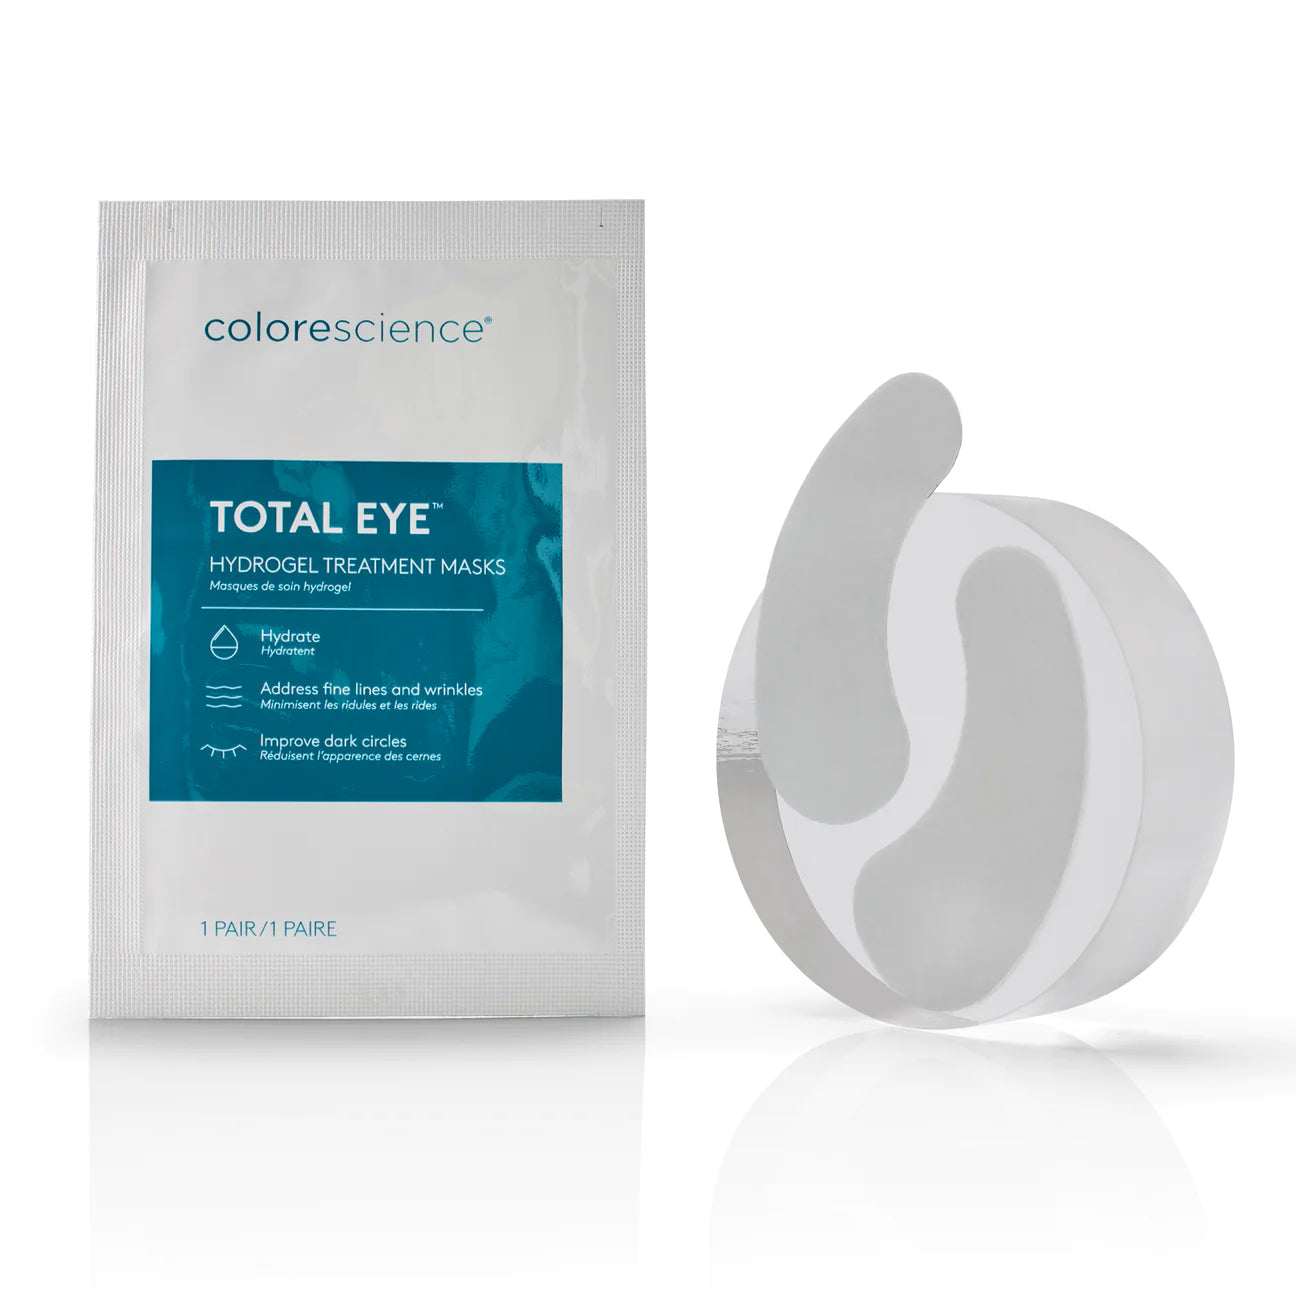 Colorescience Total Eye Hydrogel Treatment Masks